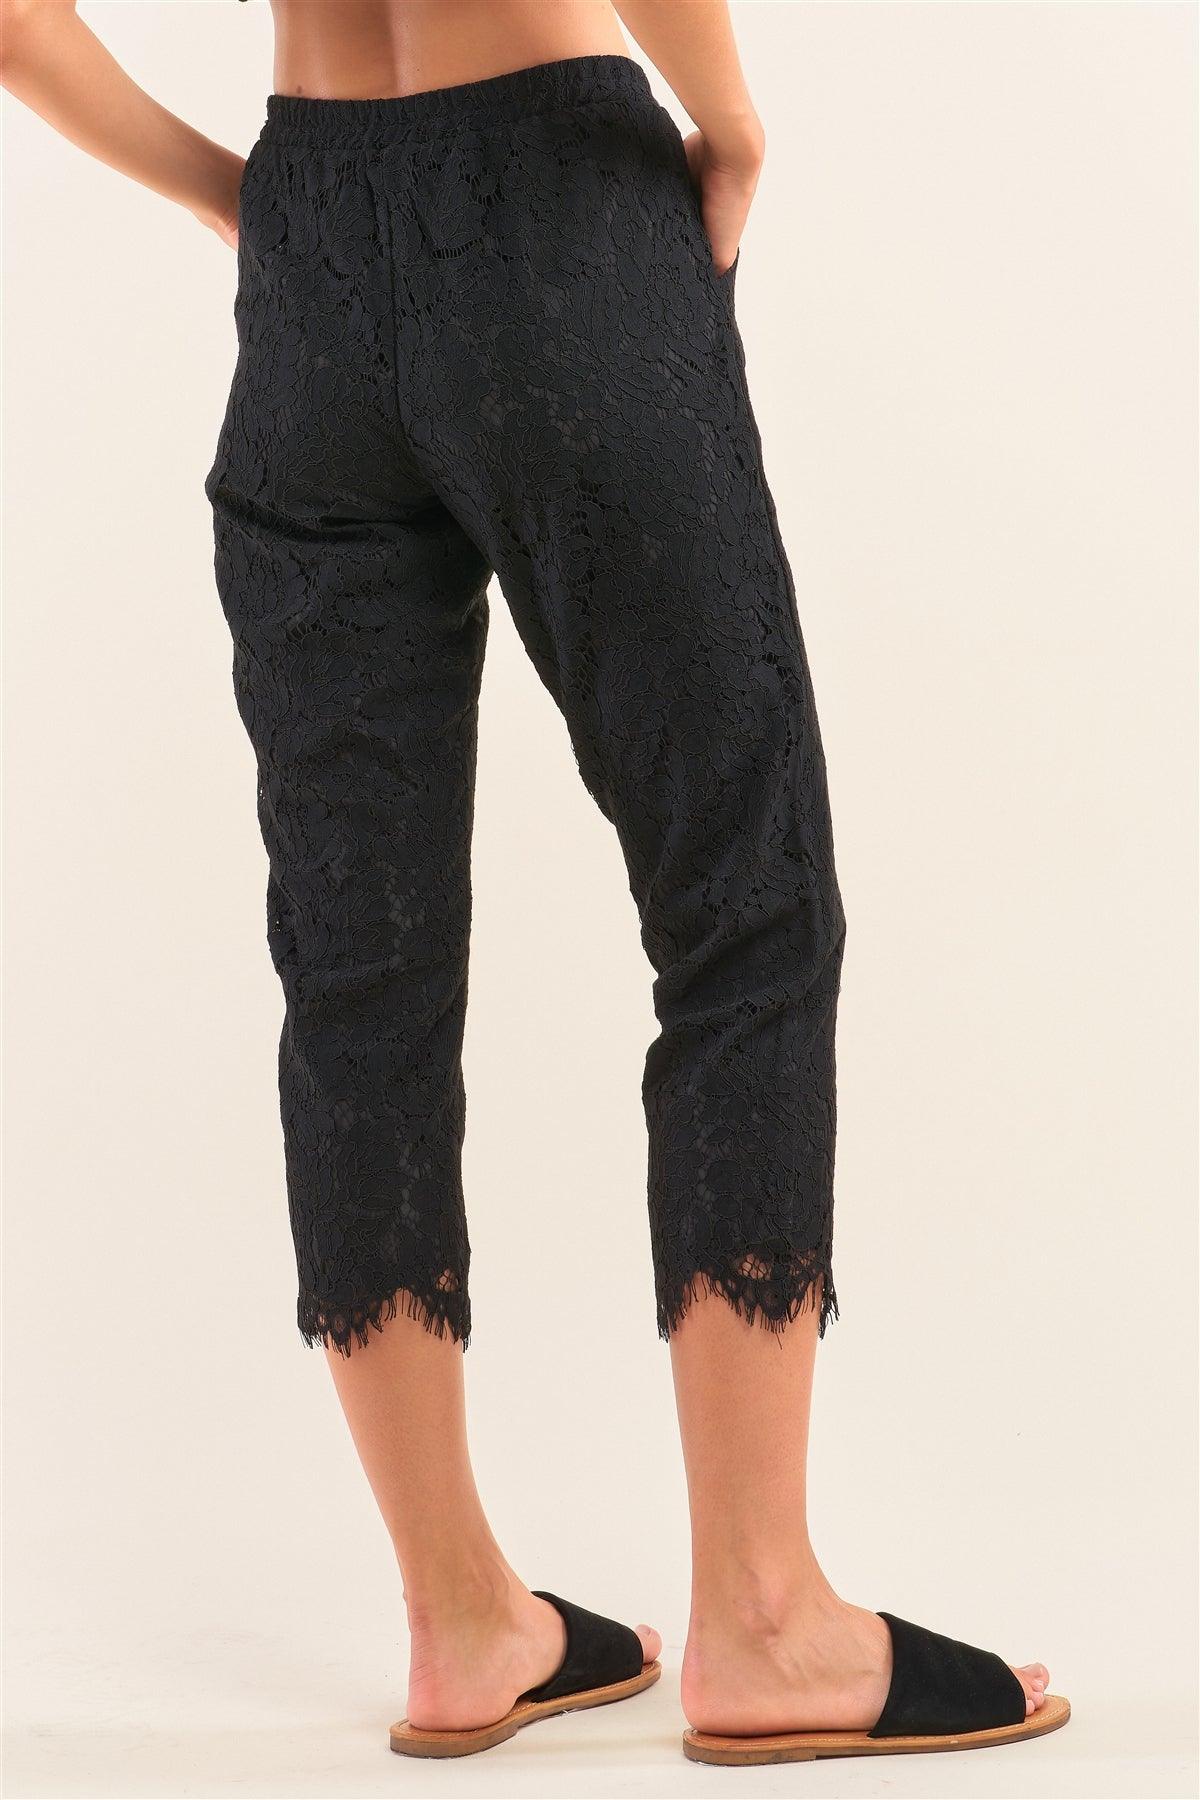 Black Mid-Rise Crochet Lace Shredded Scallop Hem Capri Pants